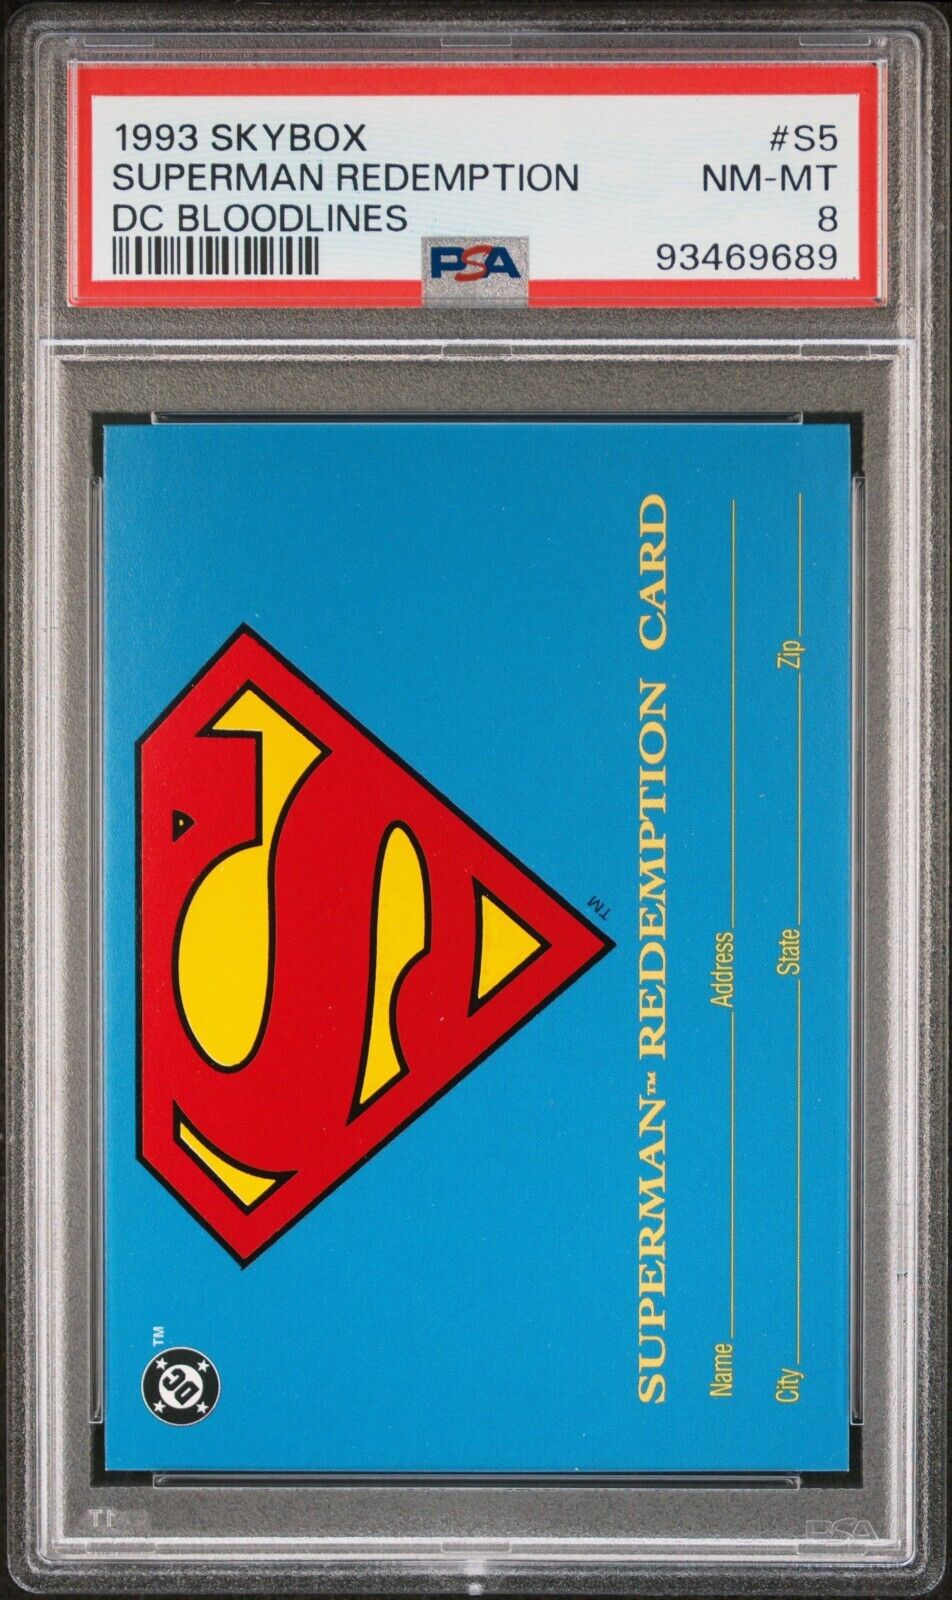 1993 Skybox DC Bloodlines Superman Redemption Card #S5 PSA 8 93469689